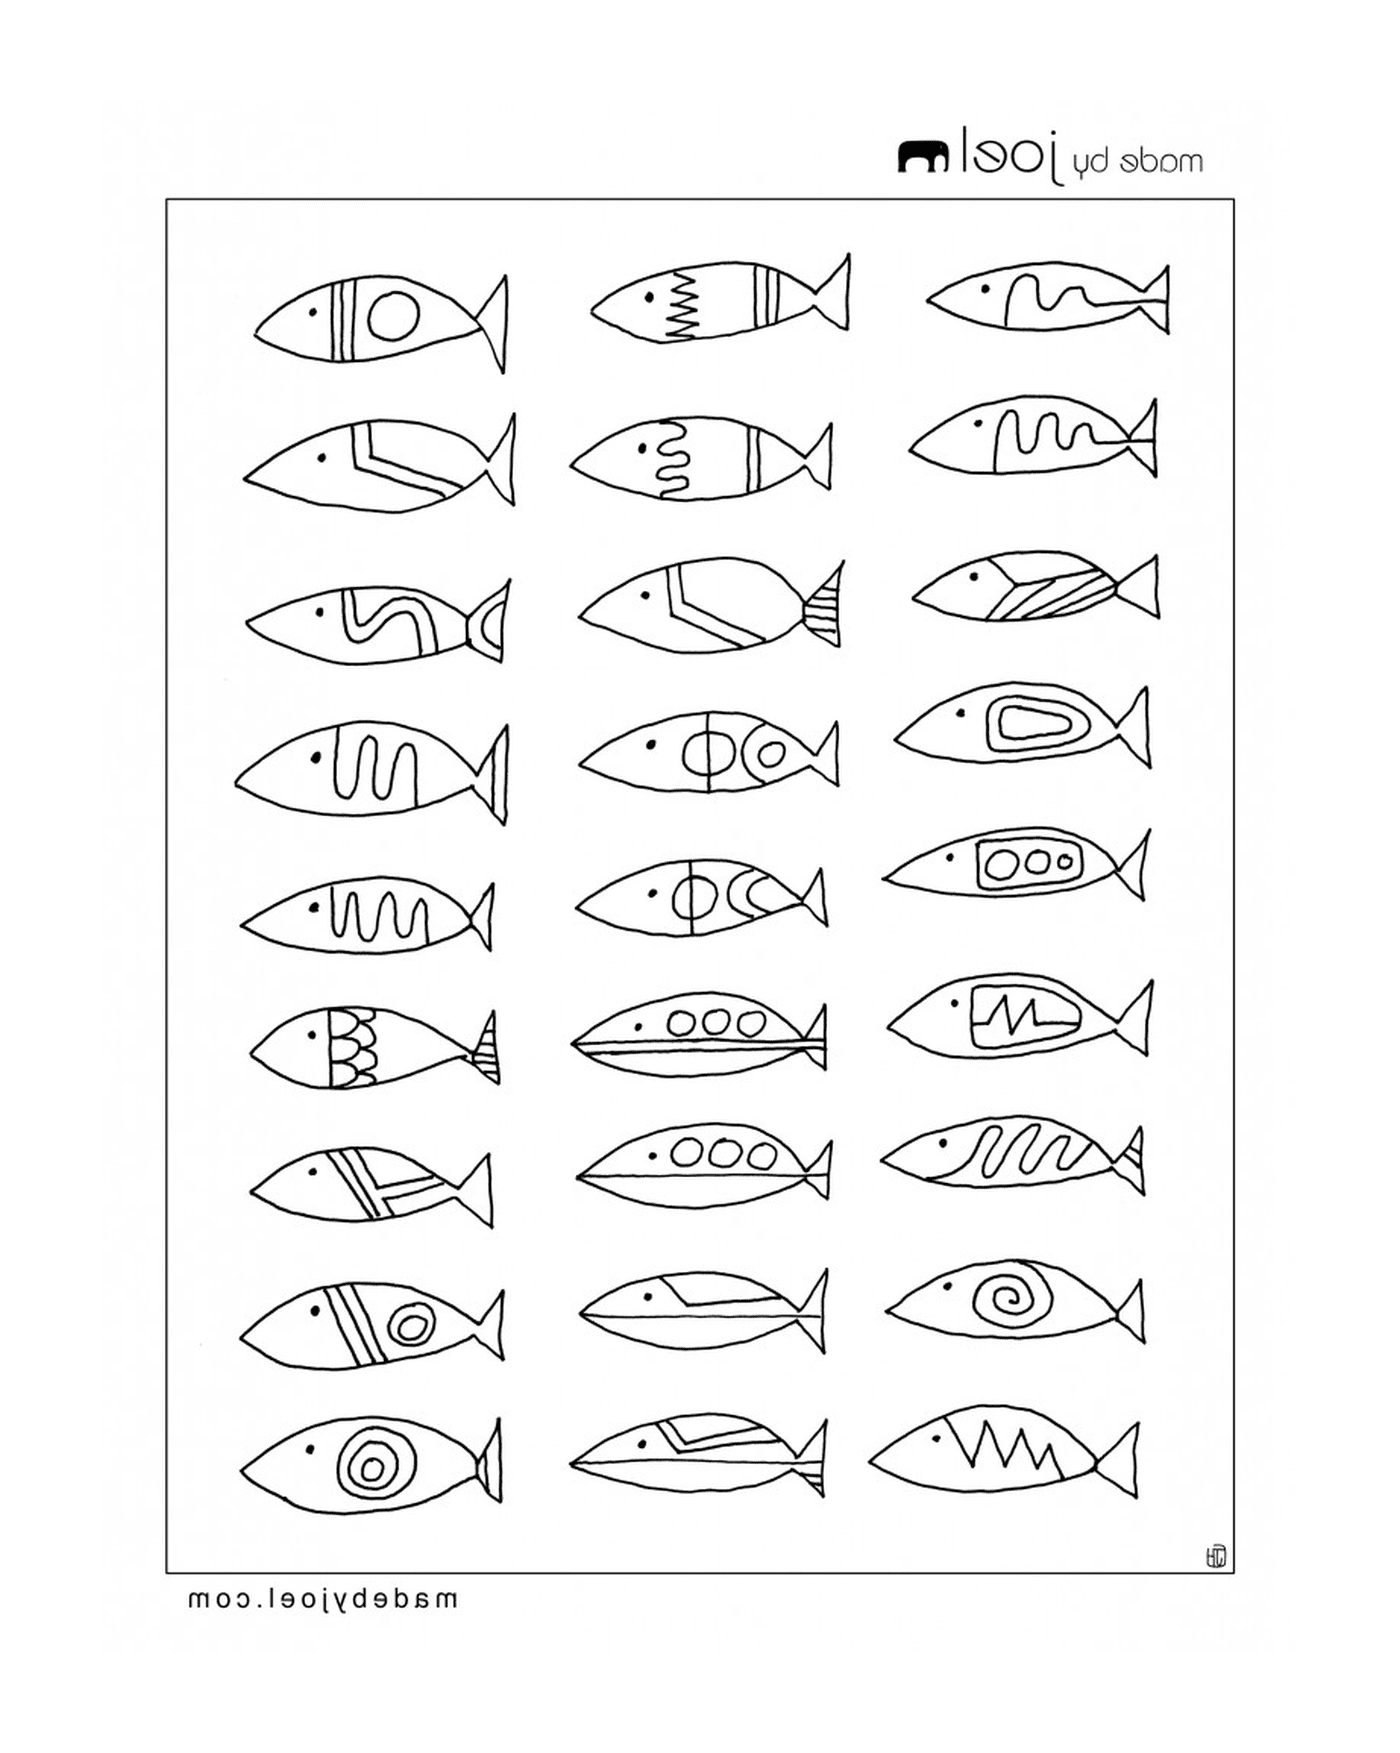  Diferentes tipos de peixes nesta página 